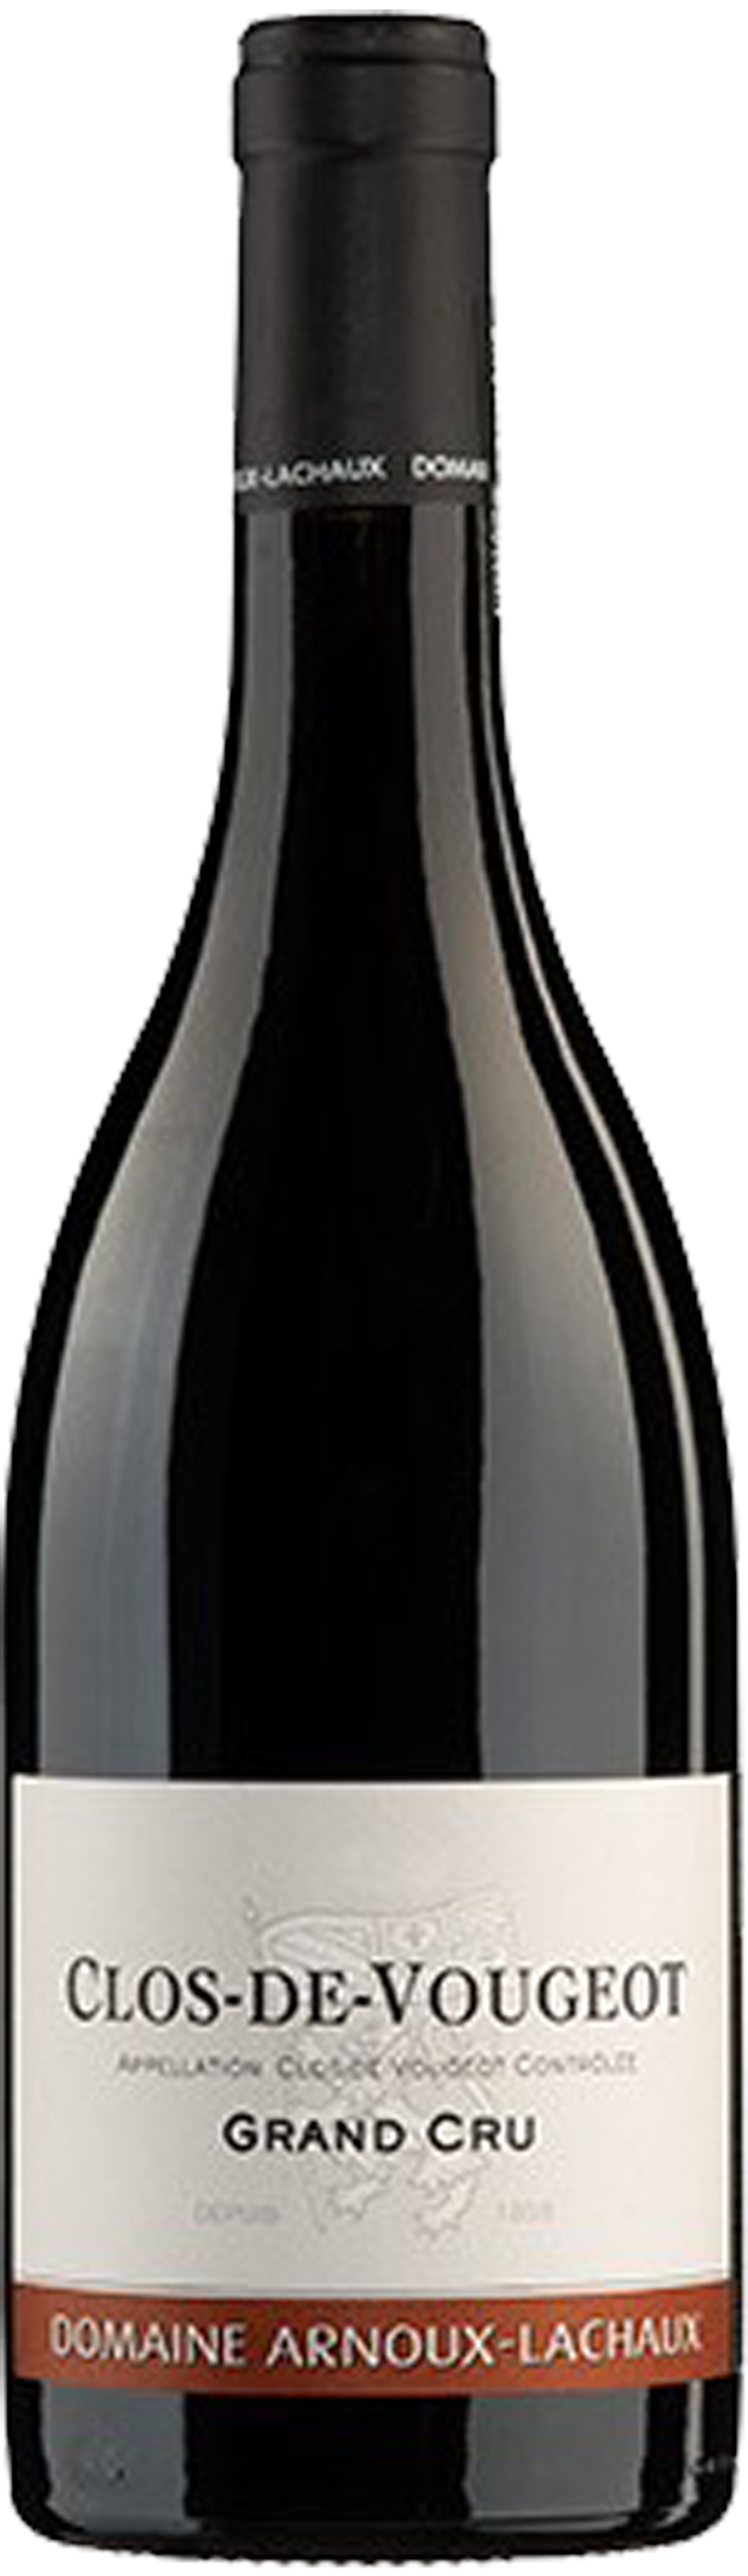 Bottle shot of 2008 Clos de Vougeot Grand Cru